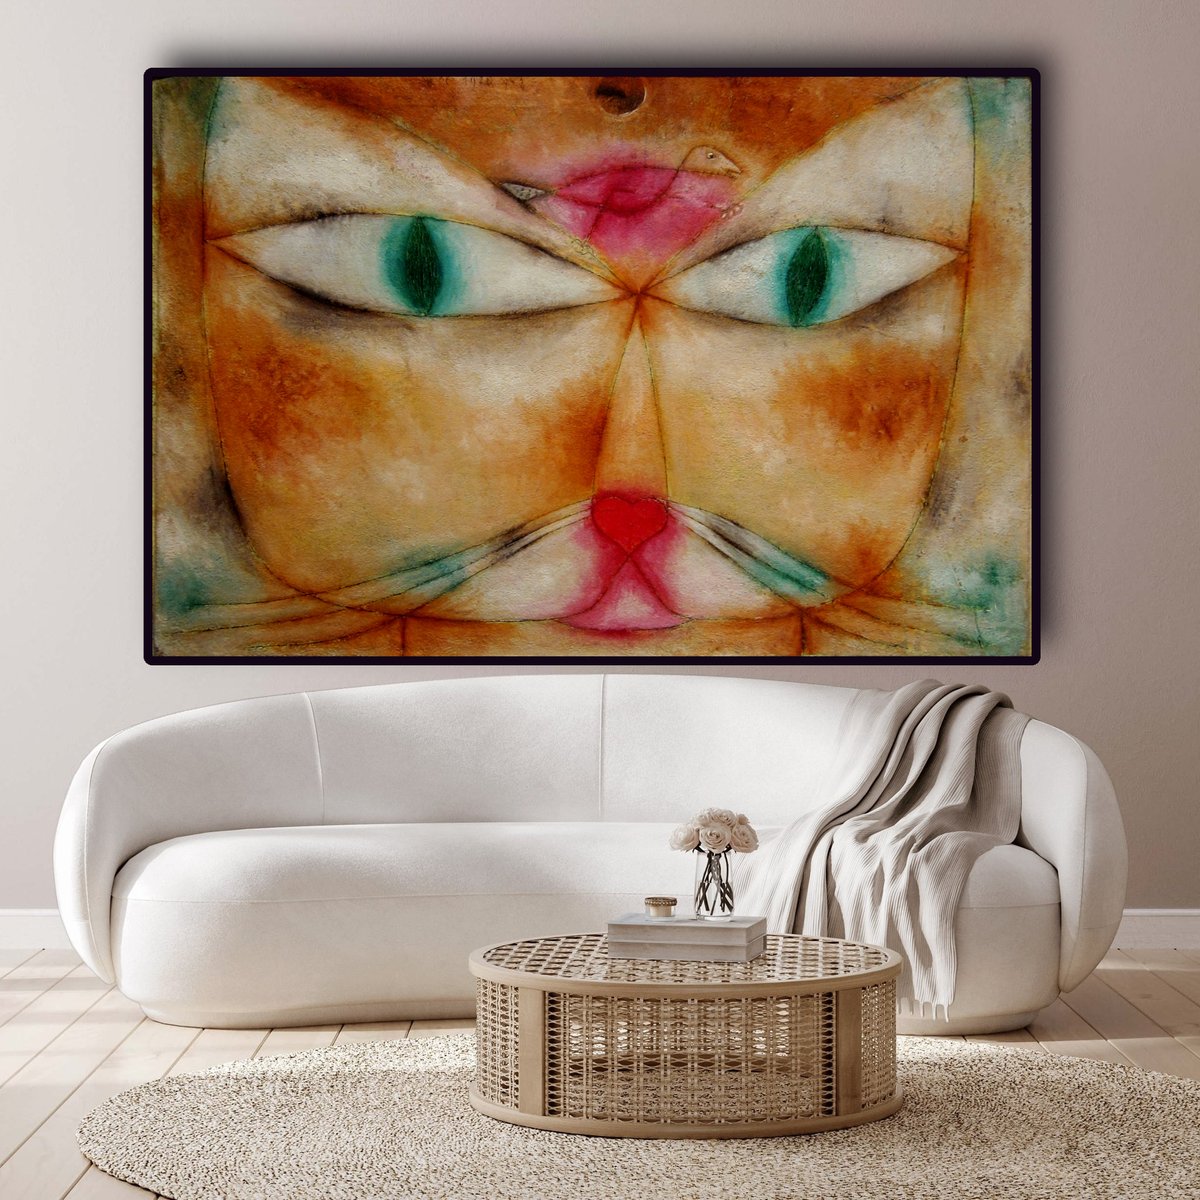 Cat and Bird, Paul Klee
rb.gy/xfrtjh
#art #abstract #bauhaus #PaulKlee #smallworks #smallbussiness #originalartwork #artistic #calledtobecreative #artshare #artlover #gifts #homedecor #interiordesign #decorativ